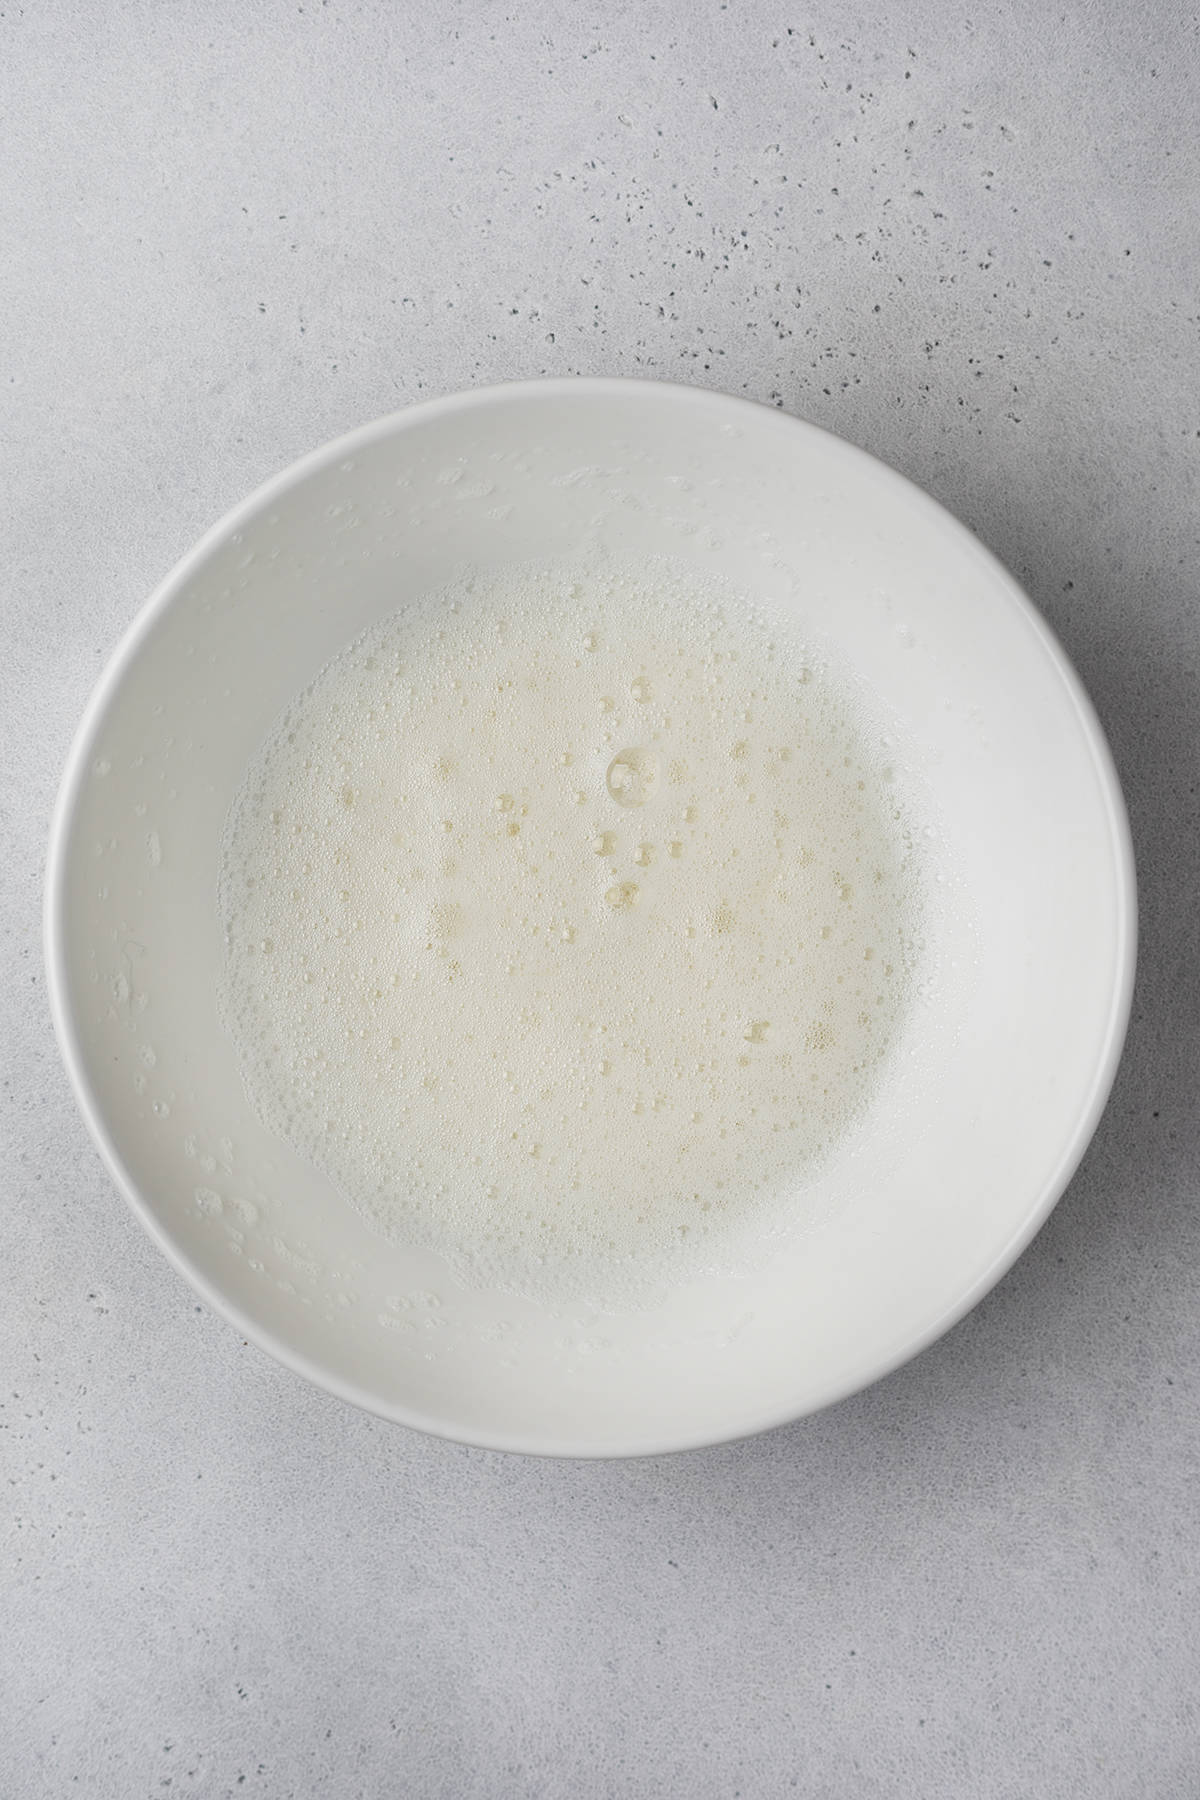 Beaten egg whites in a bowl 